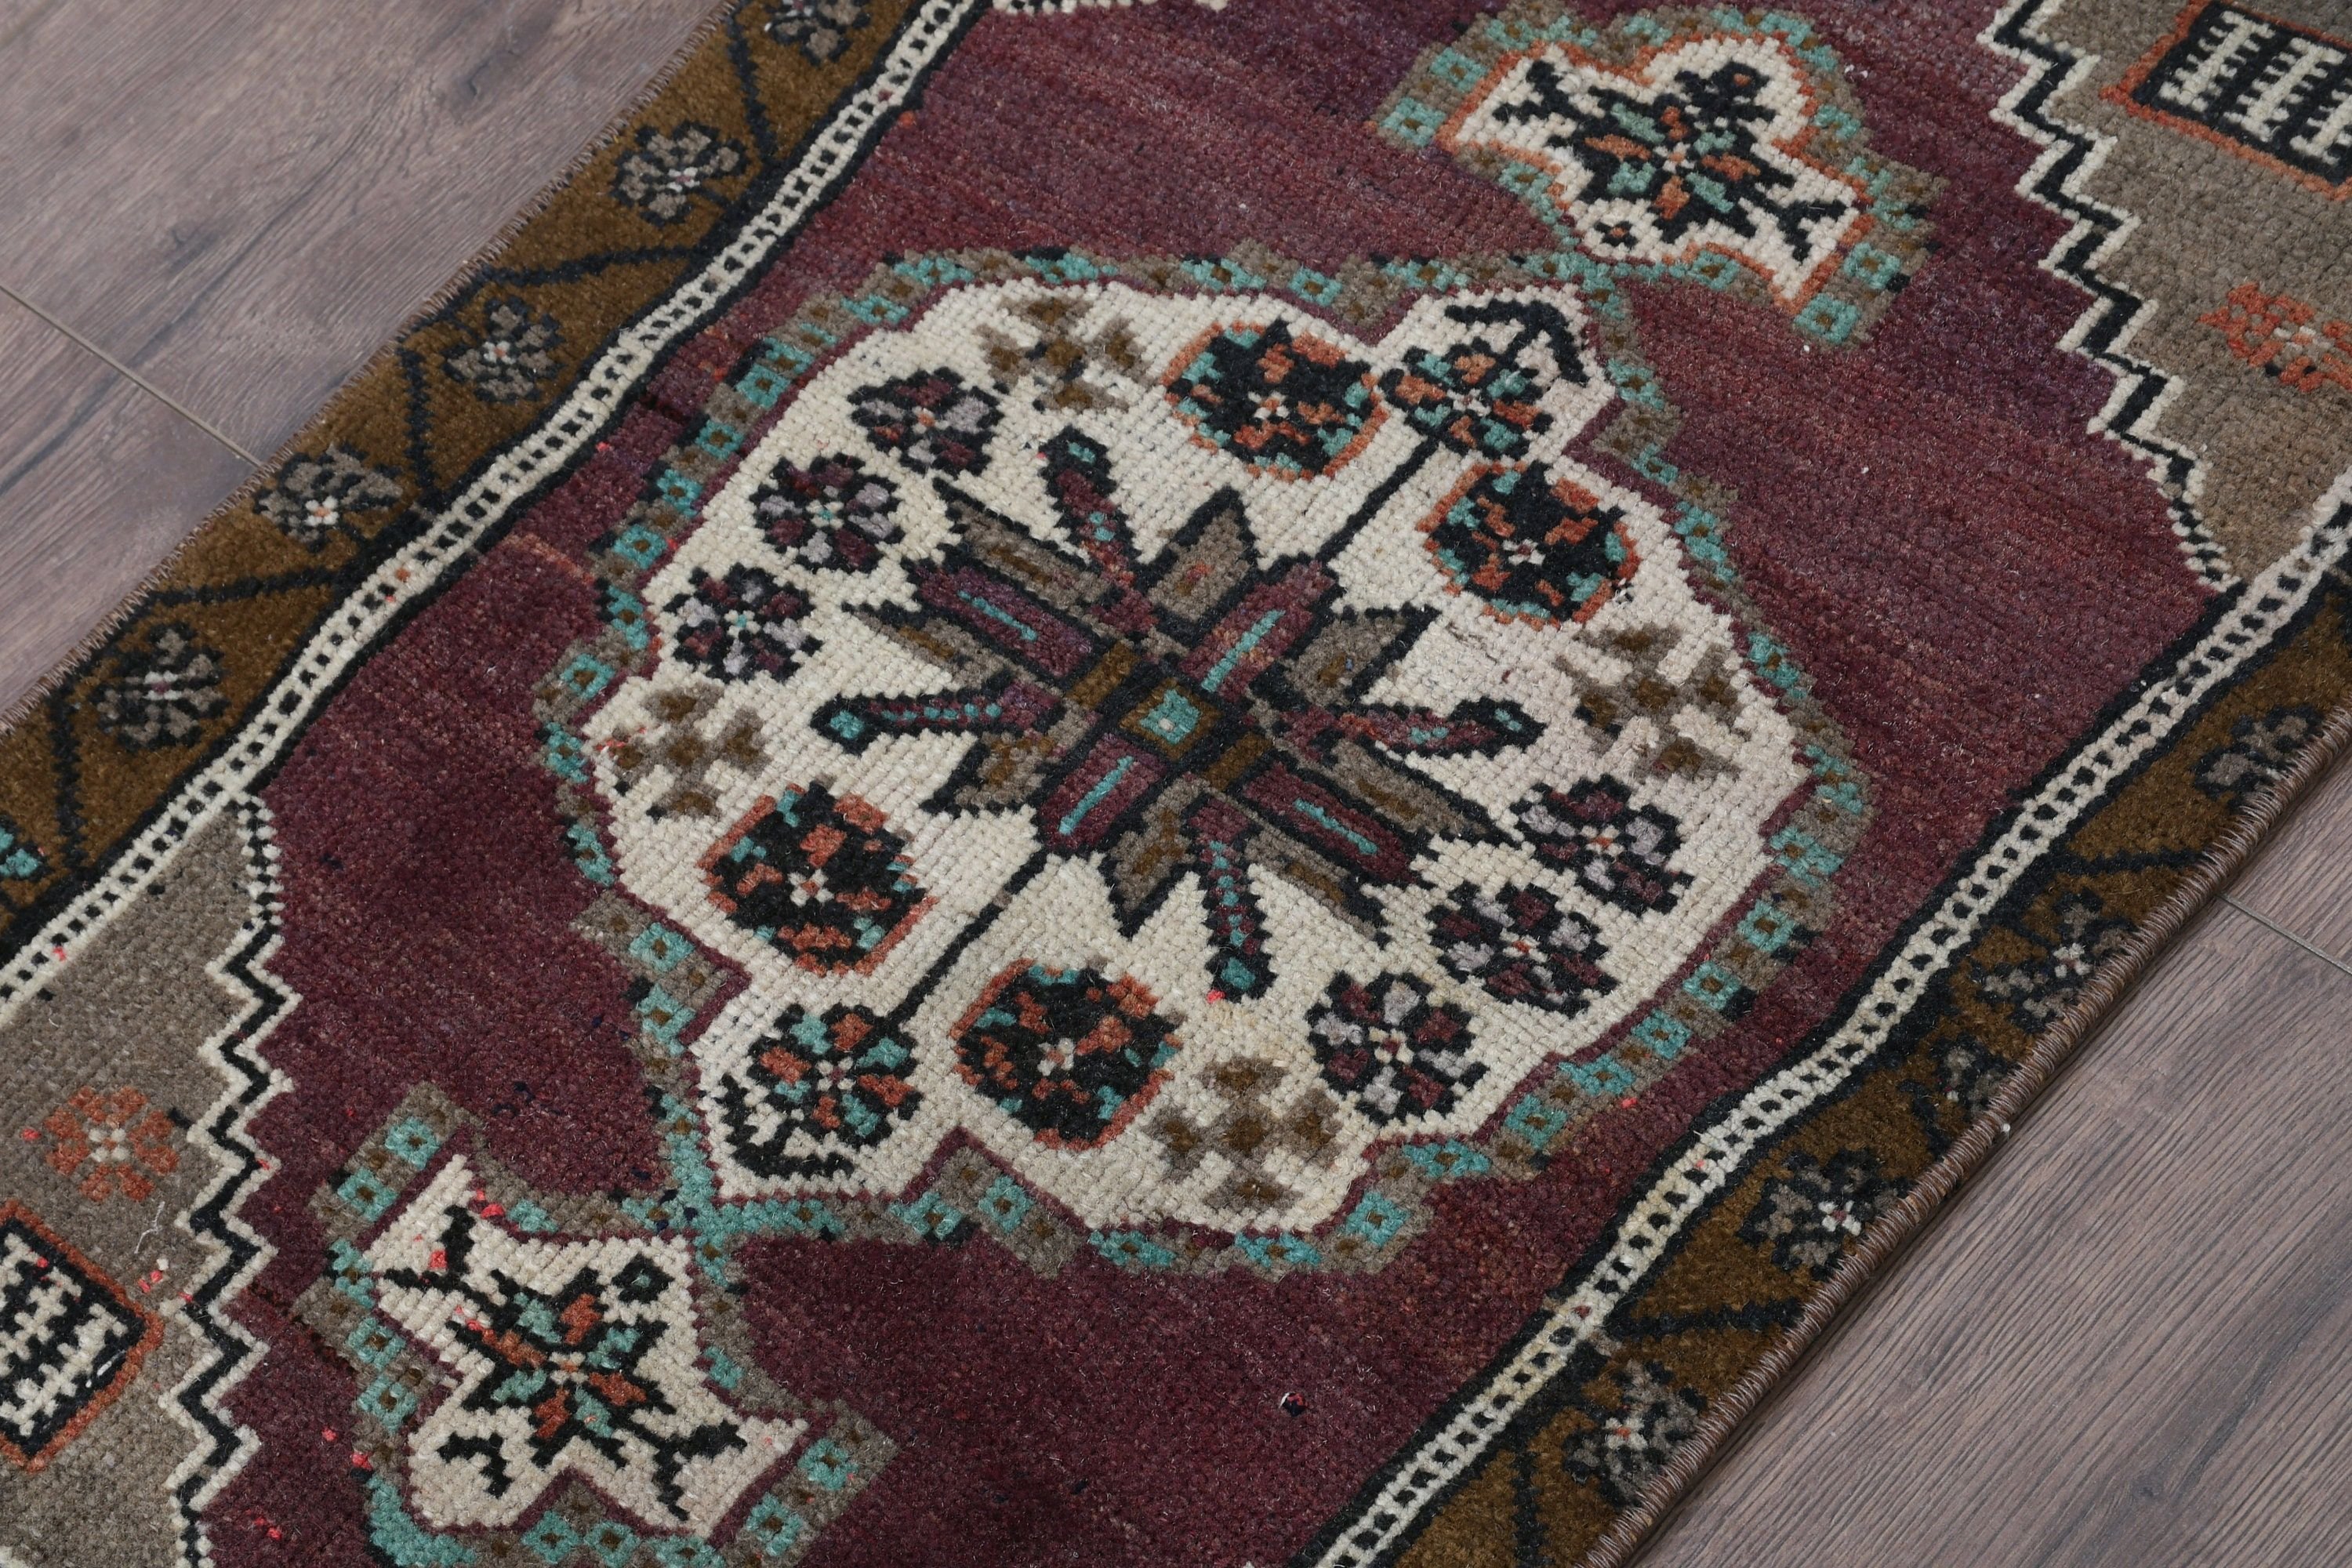 Ethnic Rug, Vintage Rug, Purple Antique Rugs, Oriental Rugs, Oushak Rug, Turkish Rugs, Bedroom Rug, Wall Hanging Rug, 1.5x2.6 ft Small Rugs